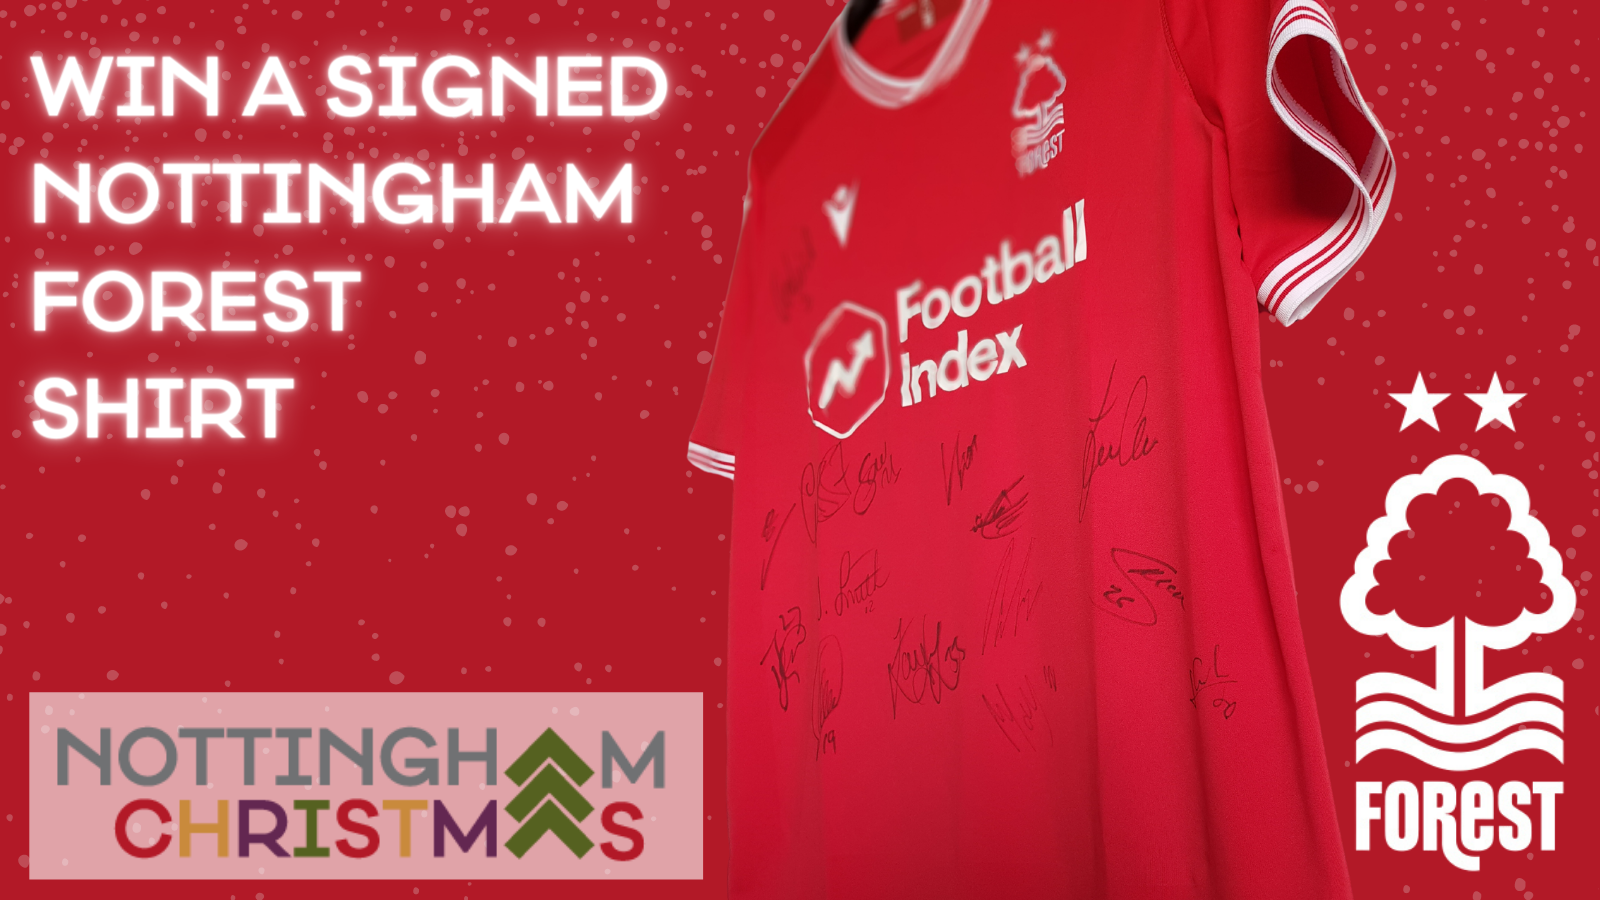 Signed Nottingham Forest shirt